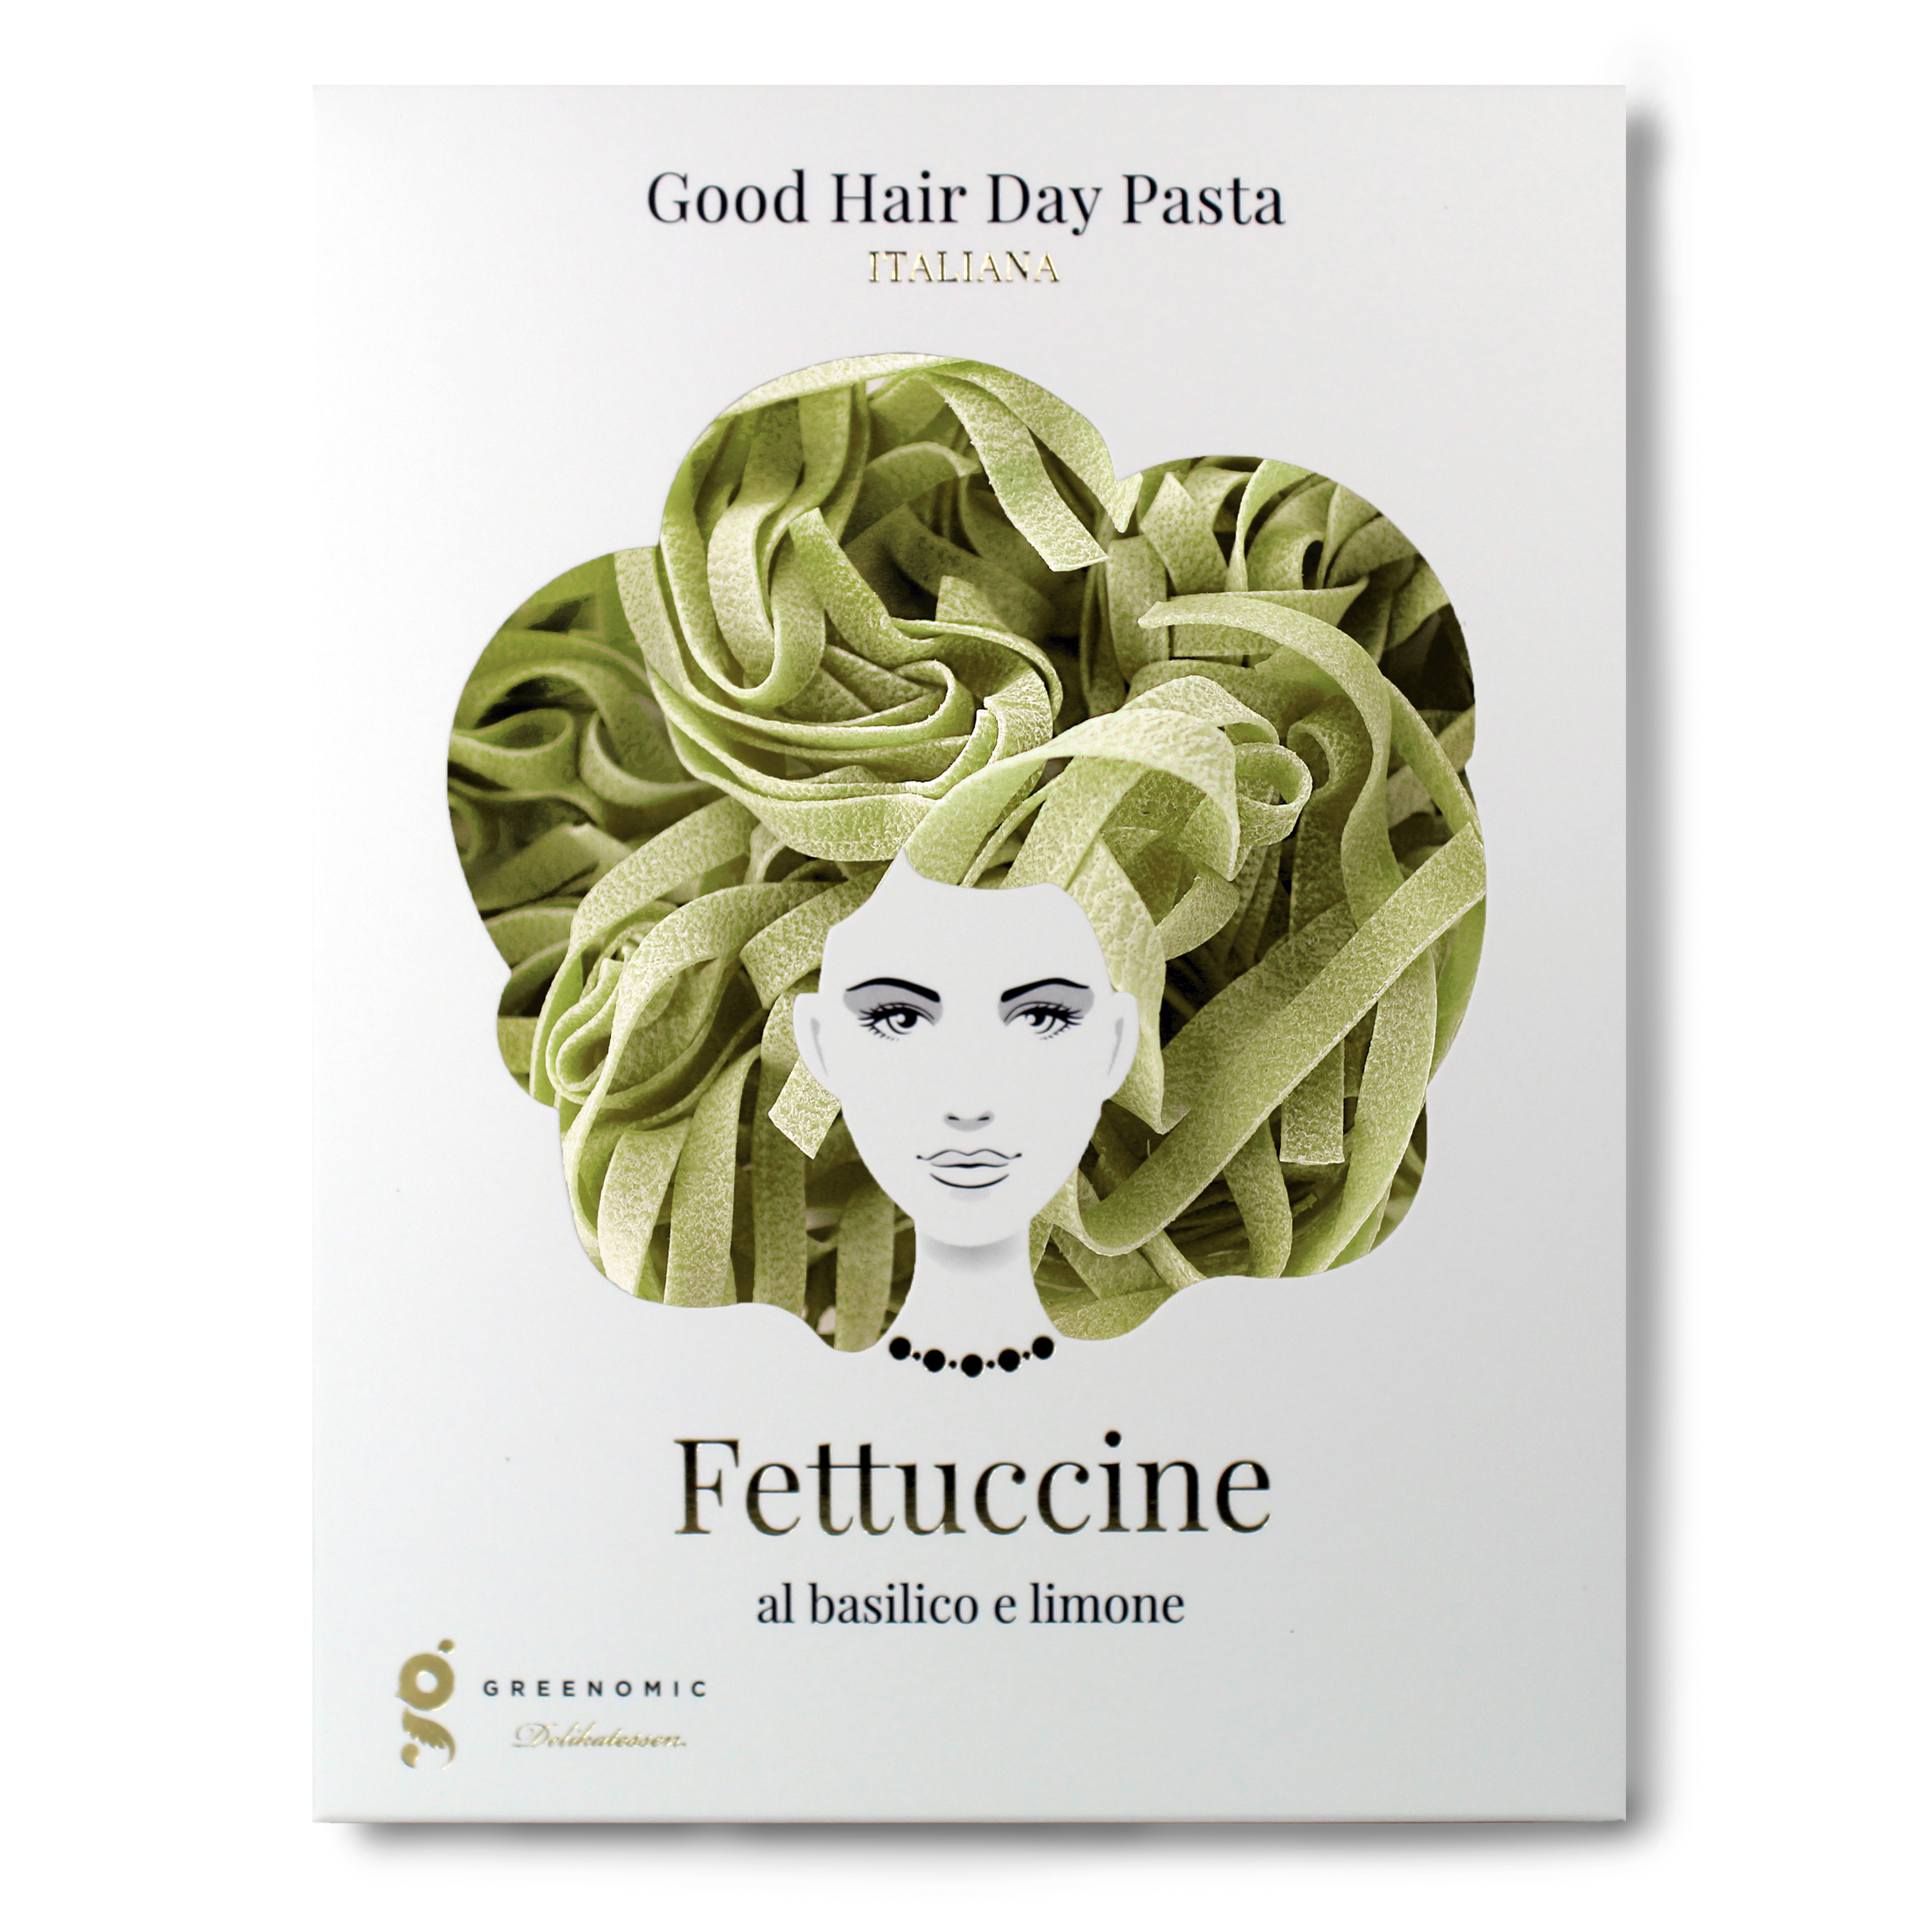 Fettuccine al Basilico e Limone - Good Hair Day Pasta